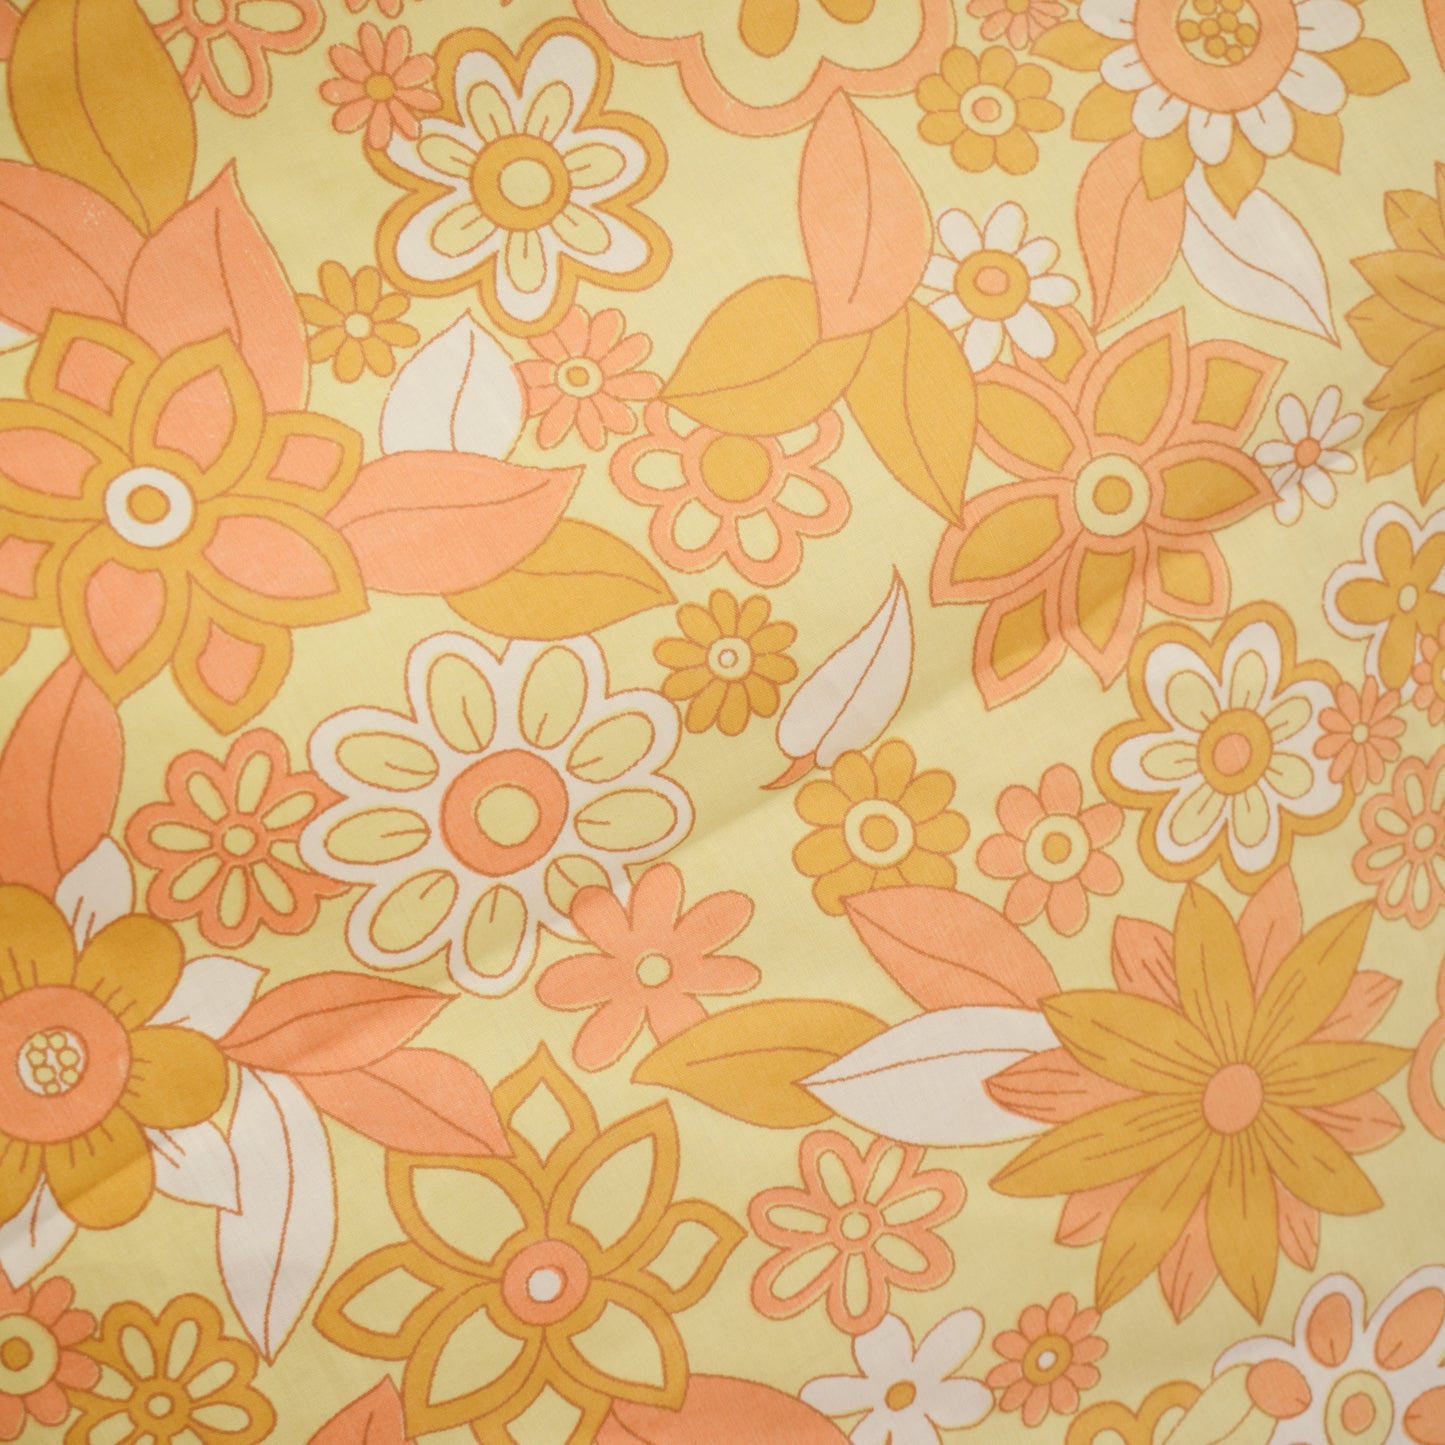 Vintage 1970s Sheets / Fabric - Flower Power - Orange